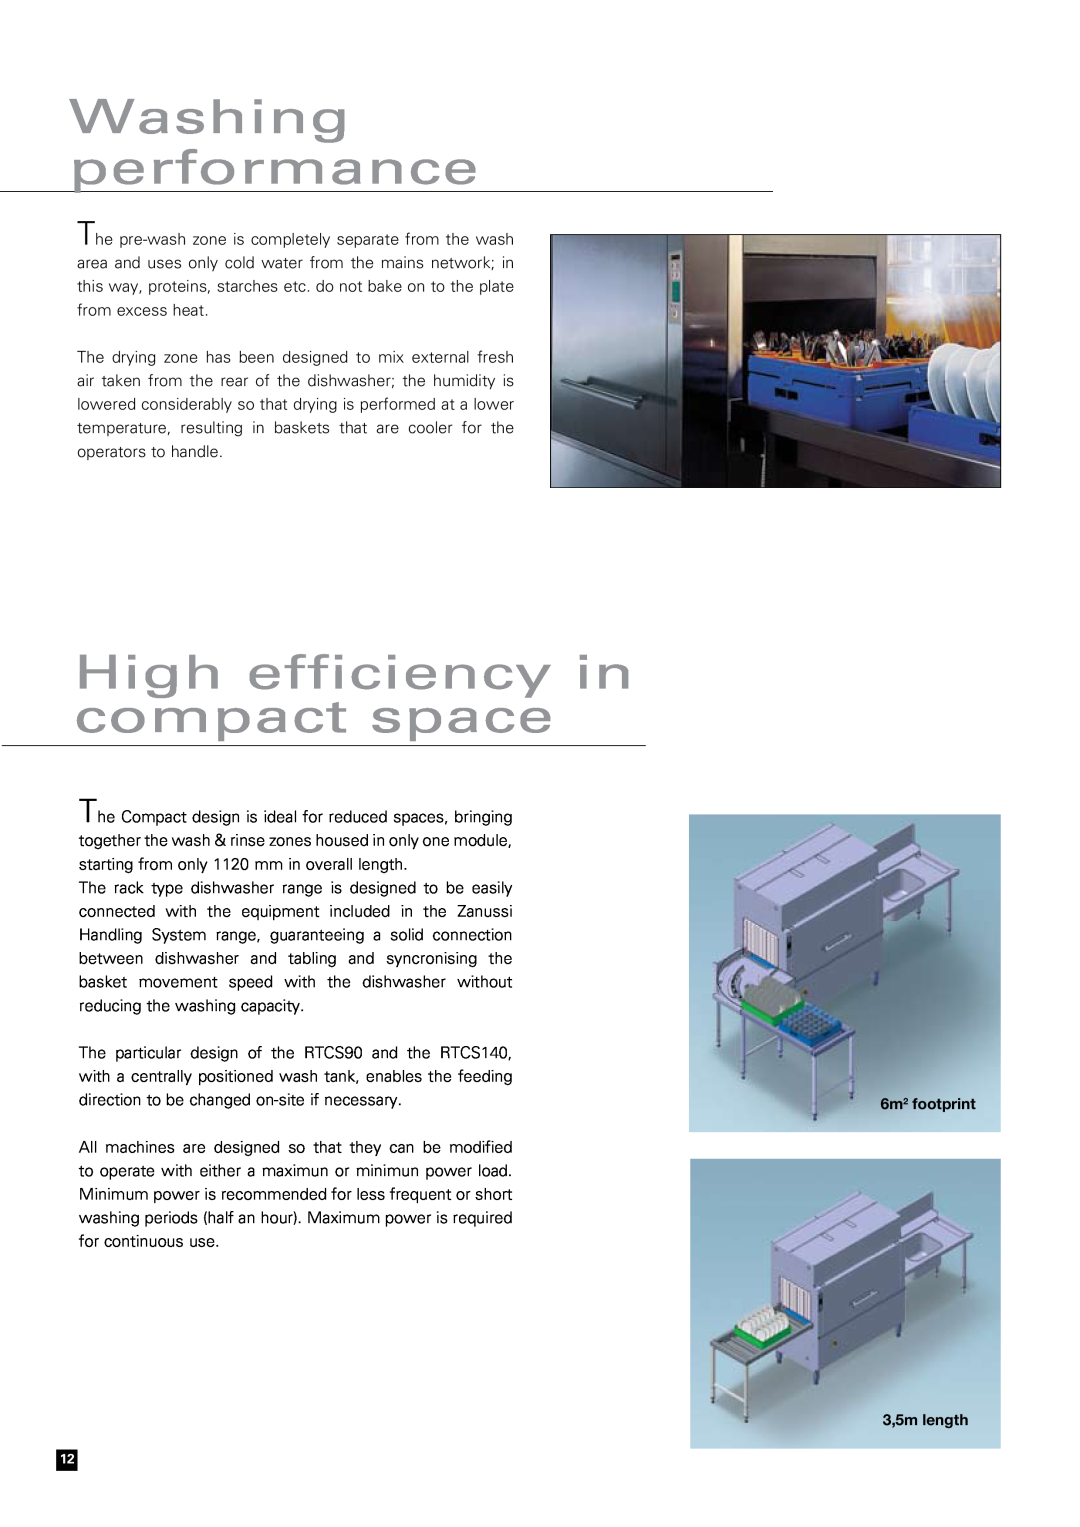 Zanussi Snack 600, N 700, RTM 140, RTM 200 High efficiency in compact space, Washing performance, 6m2 footprint 3,5m length 